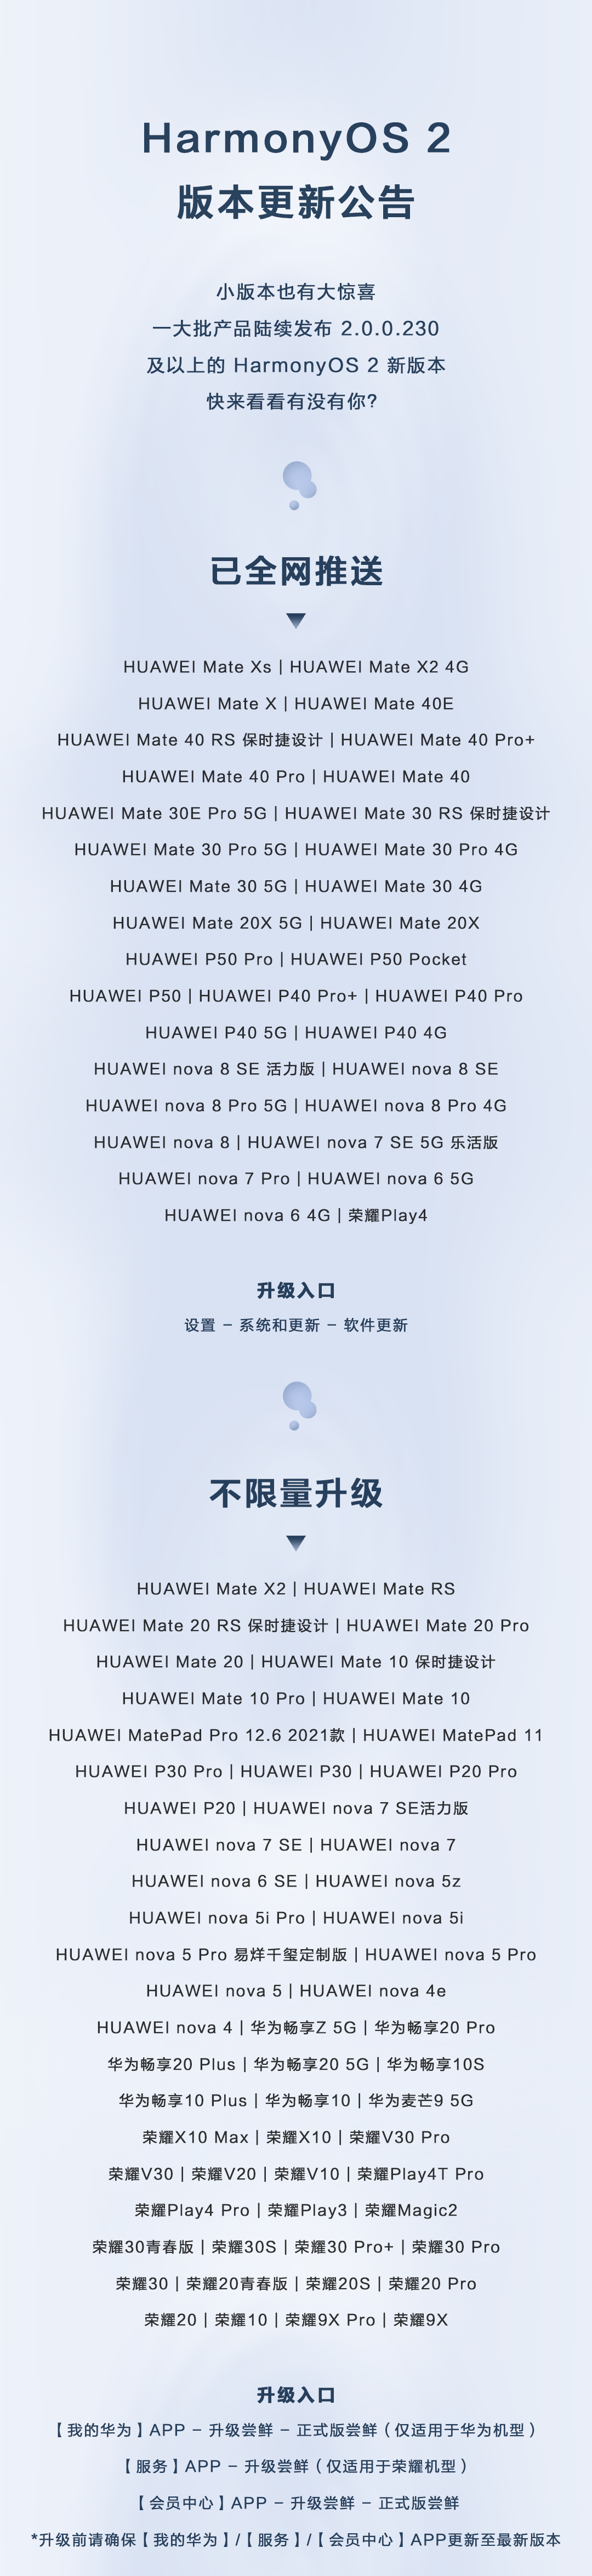 89 HarmonyOS 2.0.0.230 update Huawei devices